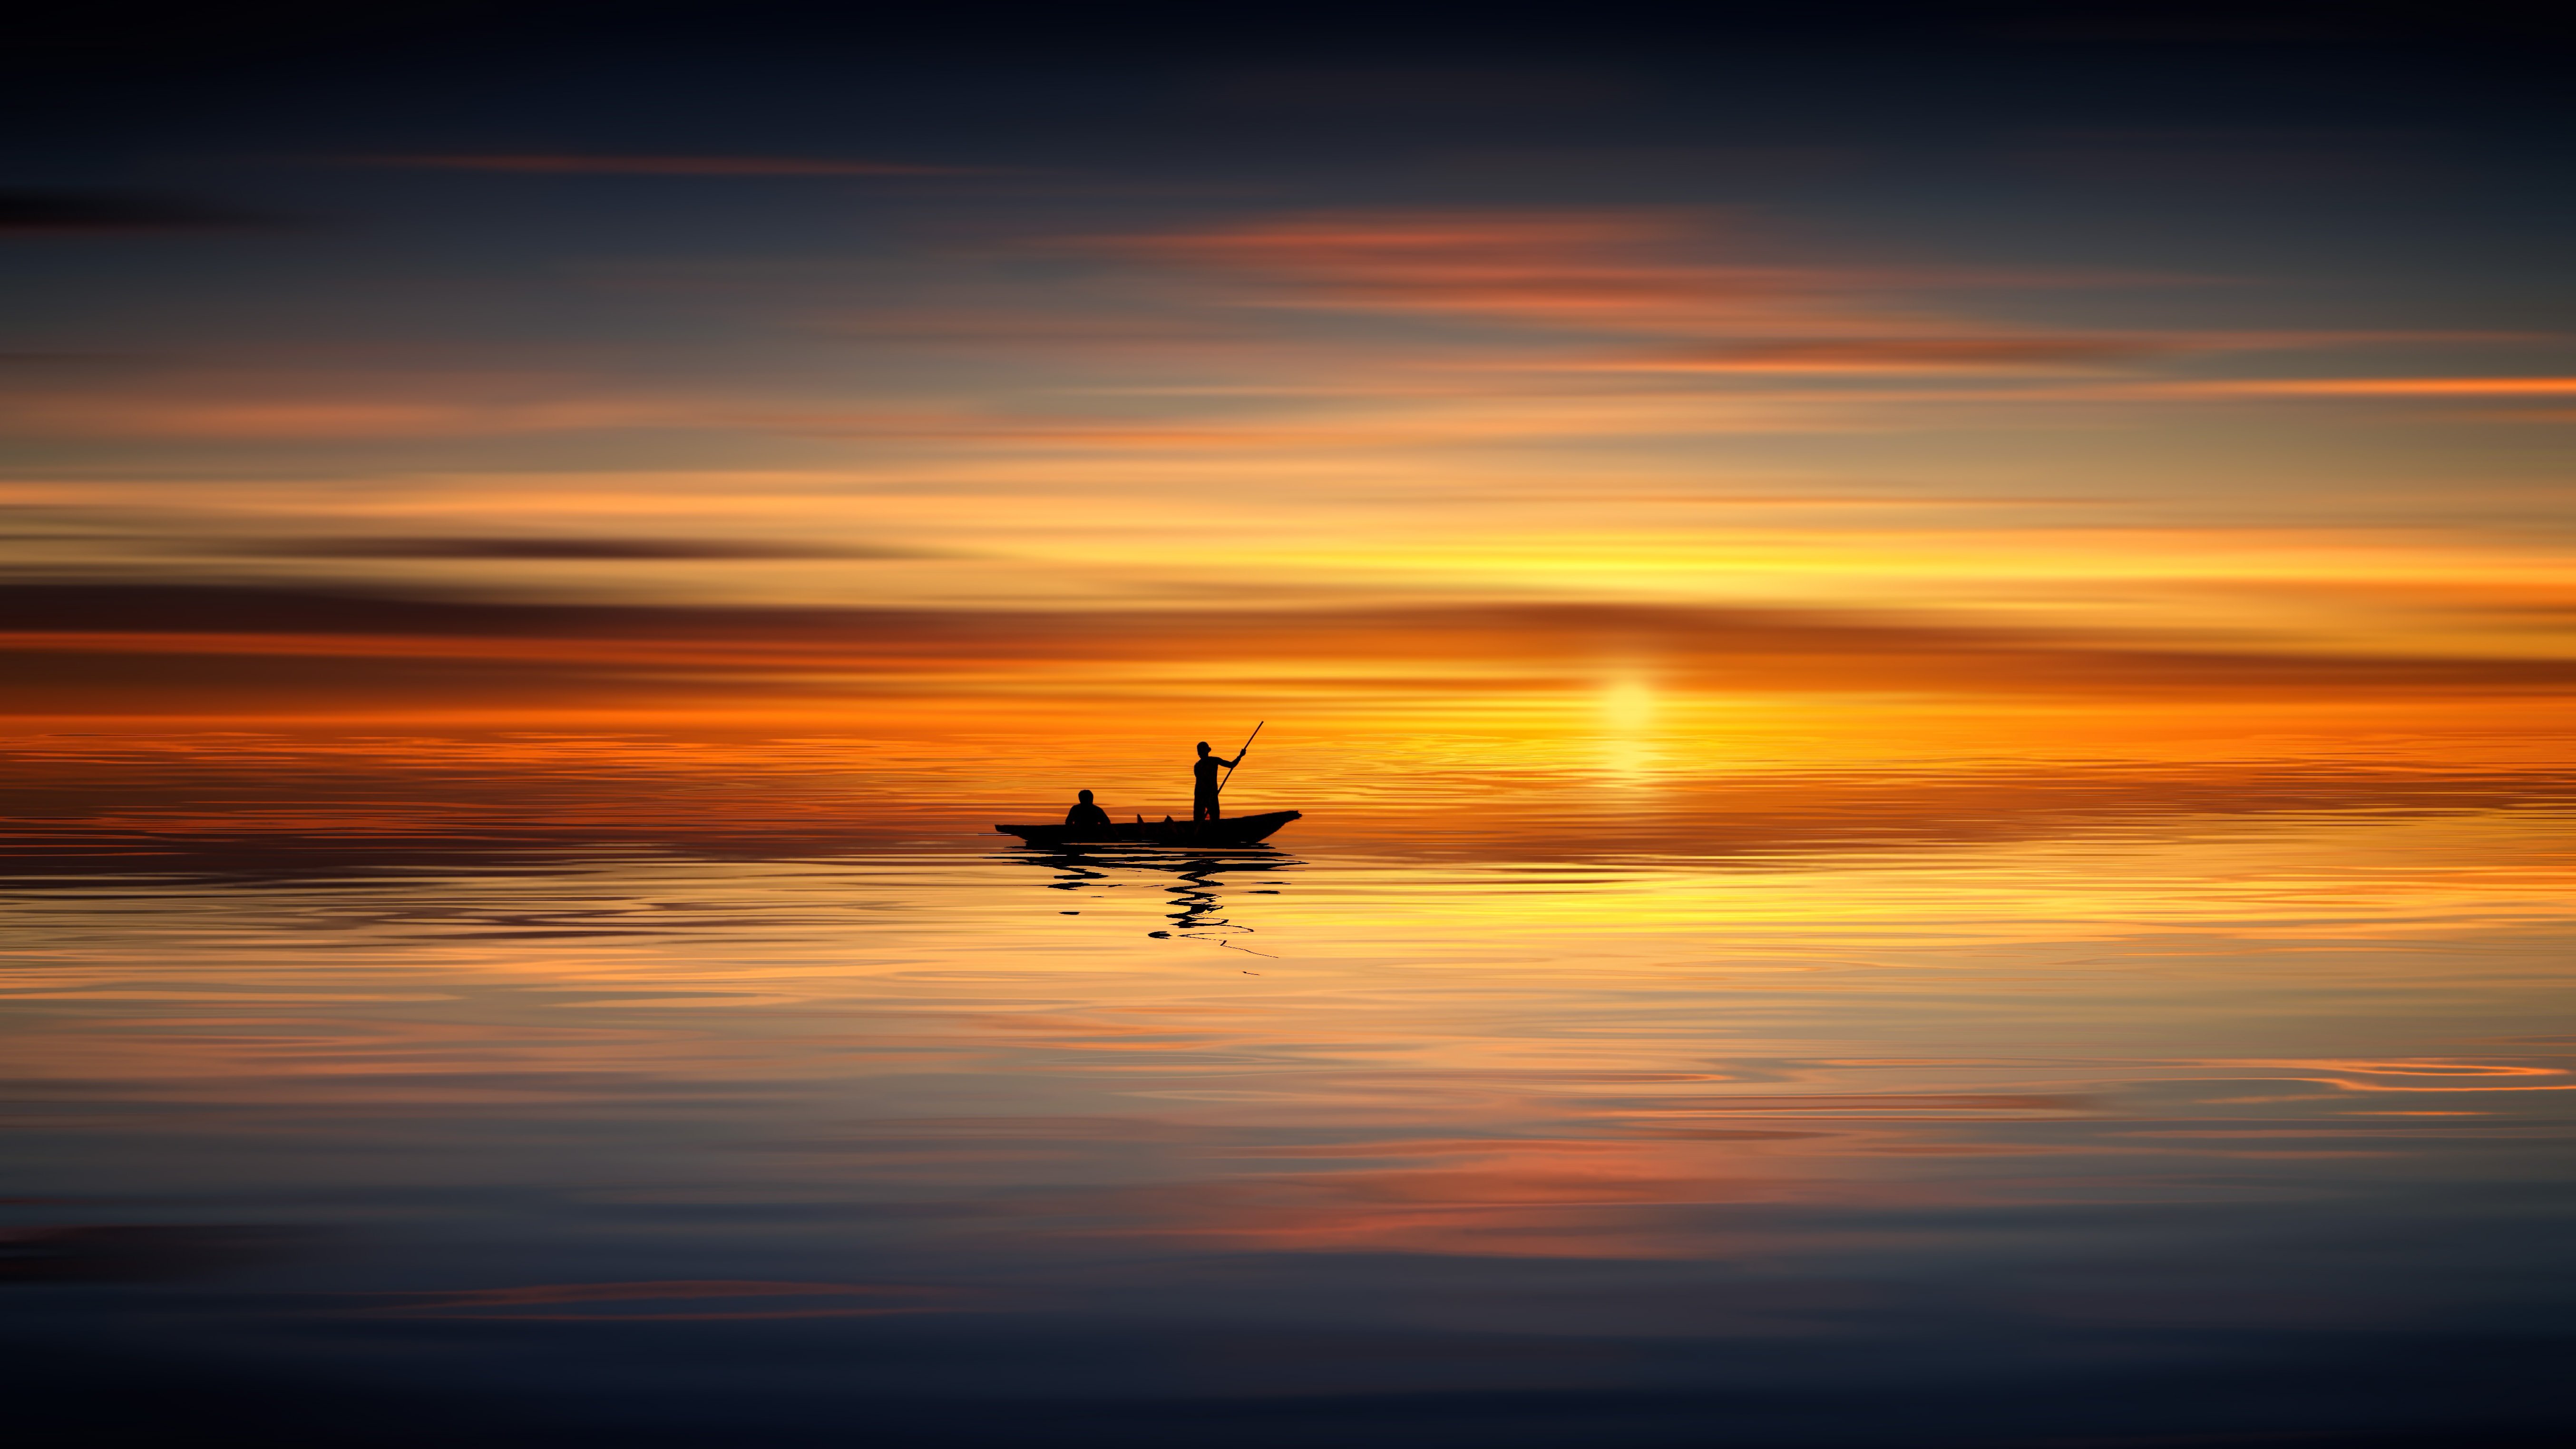 #boat, #ocean, #sunset, #landscape, #photography, #hd, k